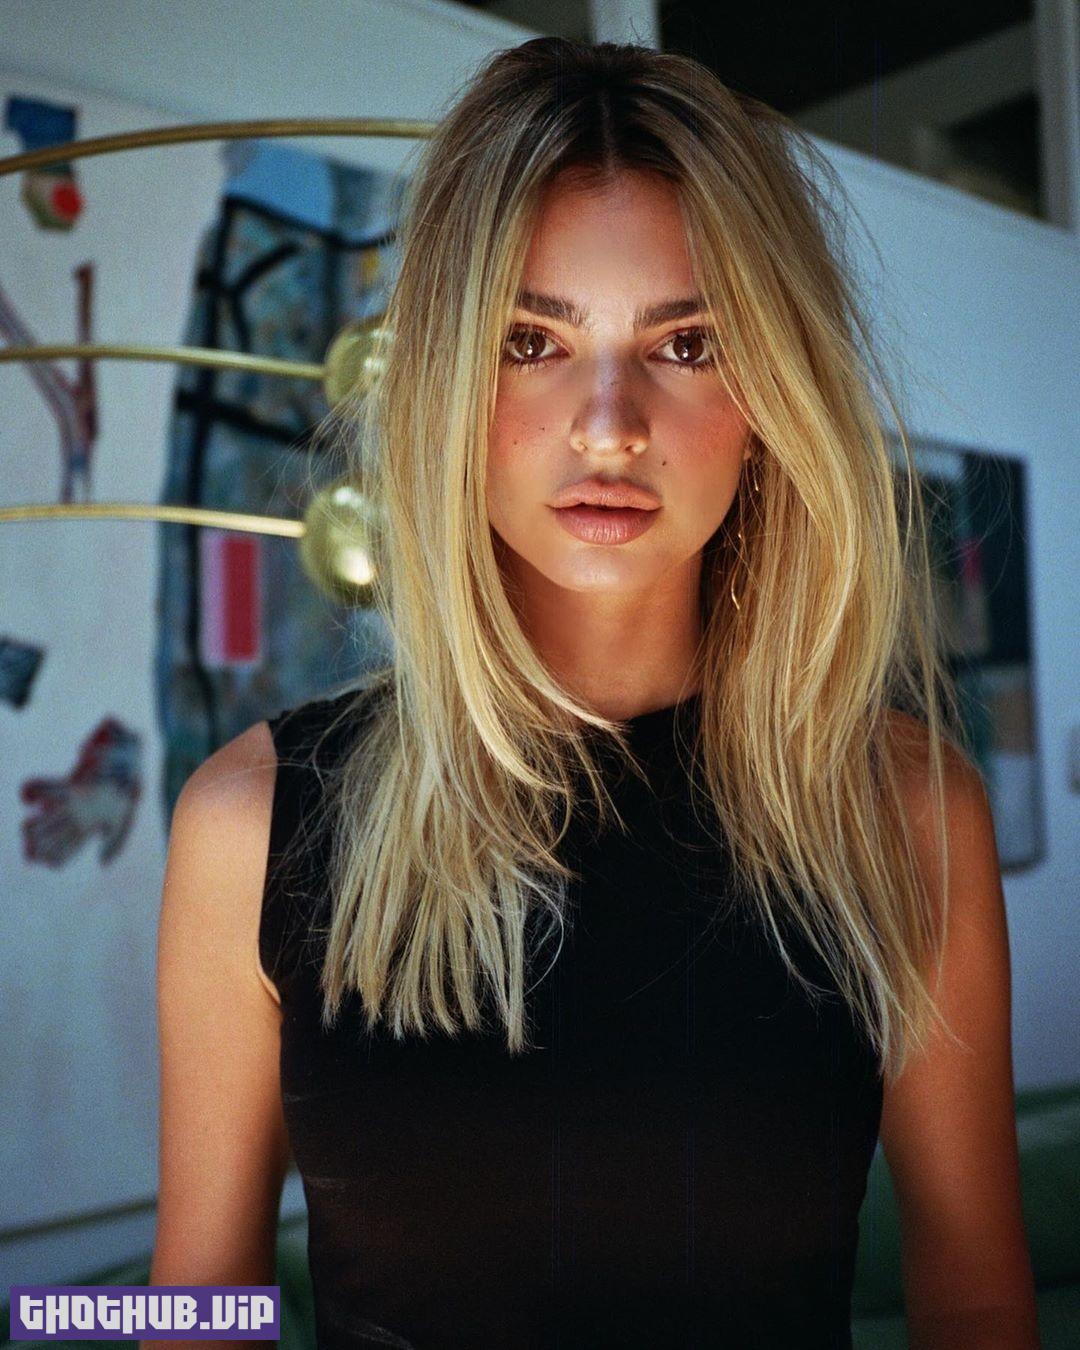 Hot Emily Ratajkowski Became A Sexy Blonde Photos And Video